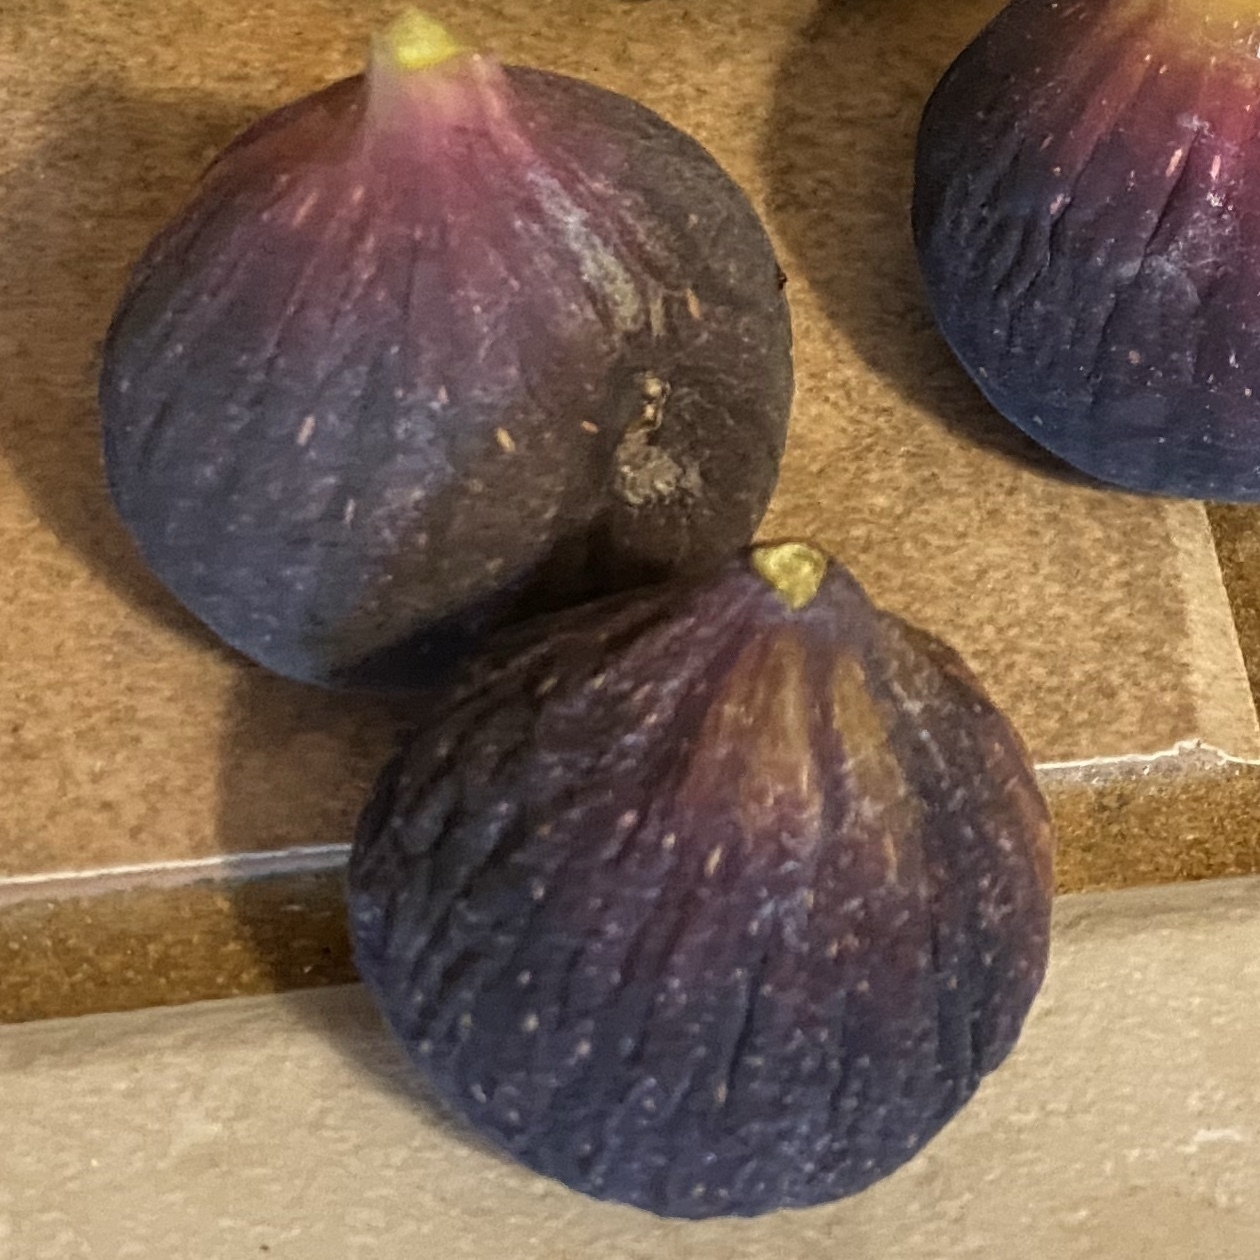 ripe figs